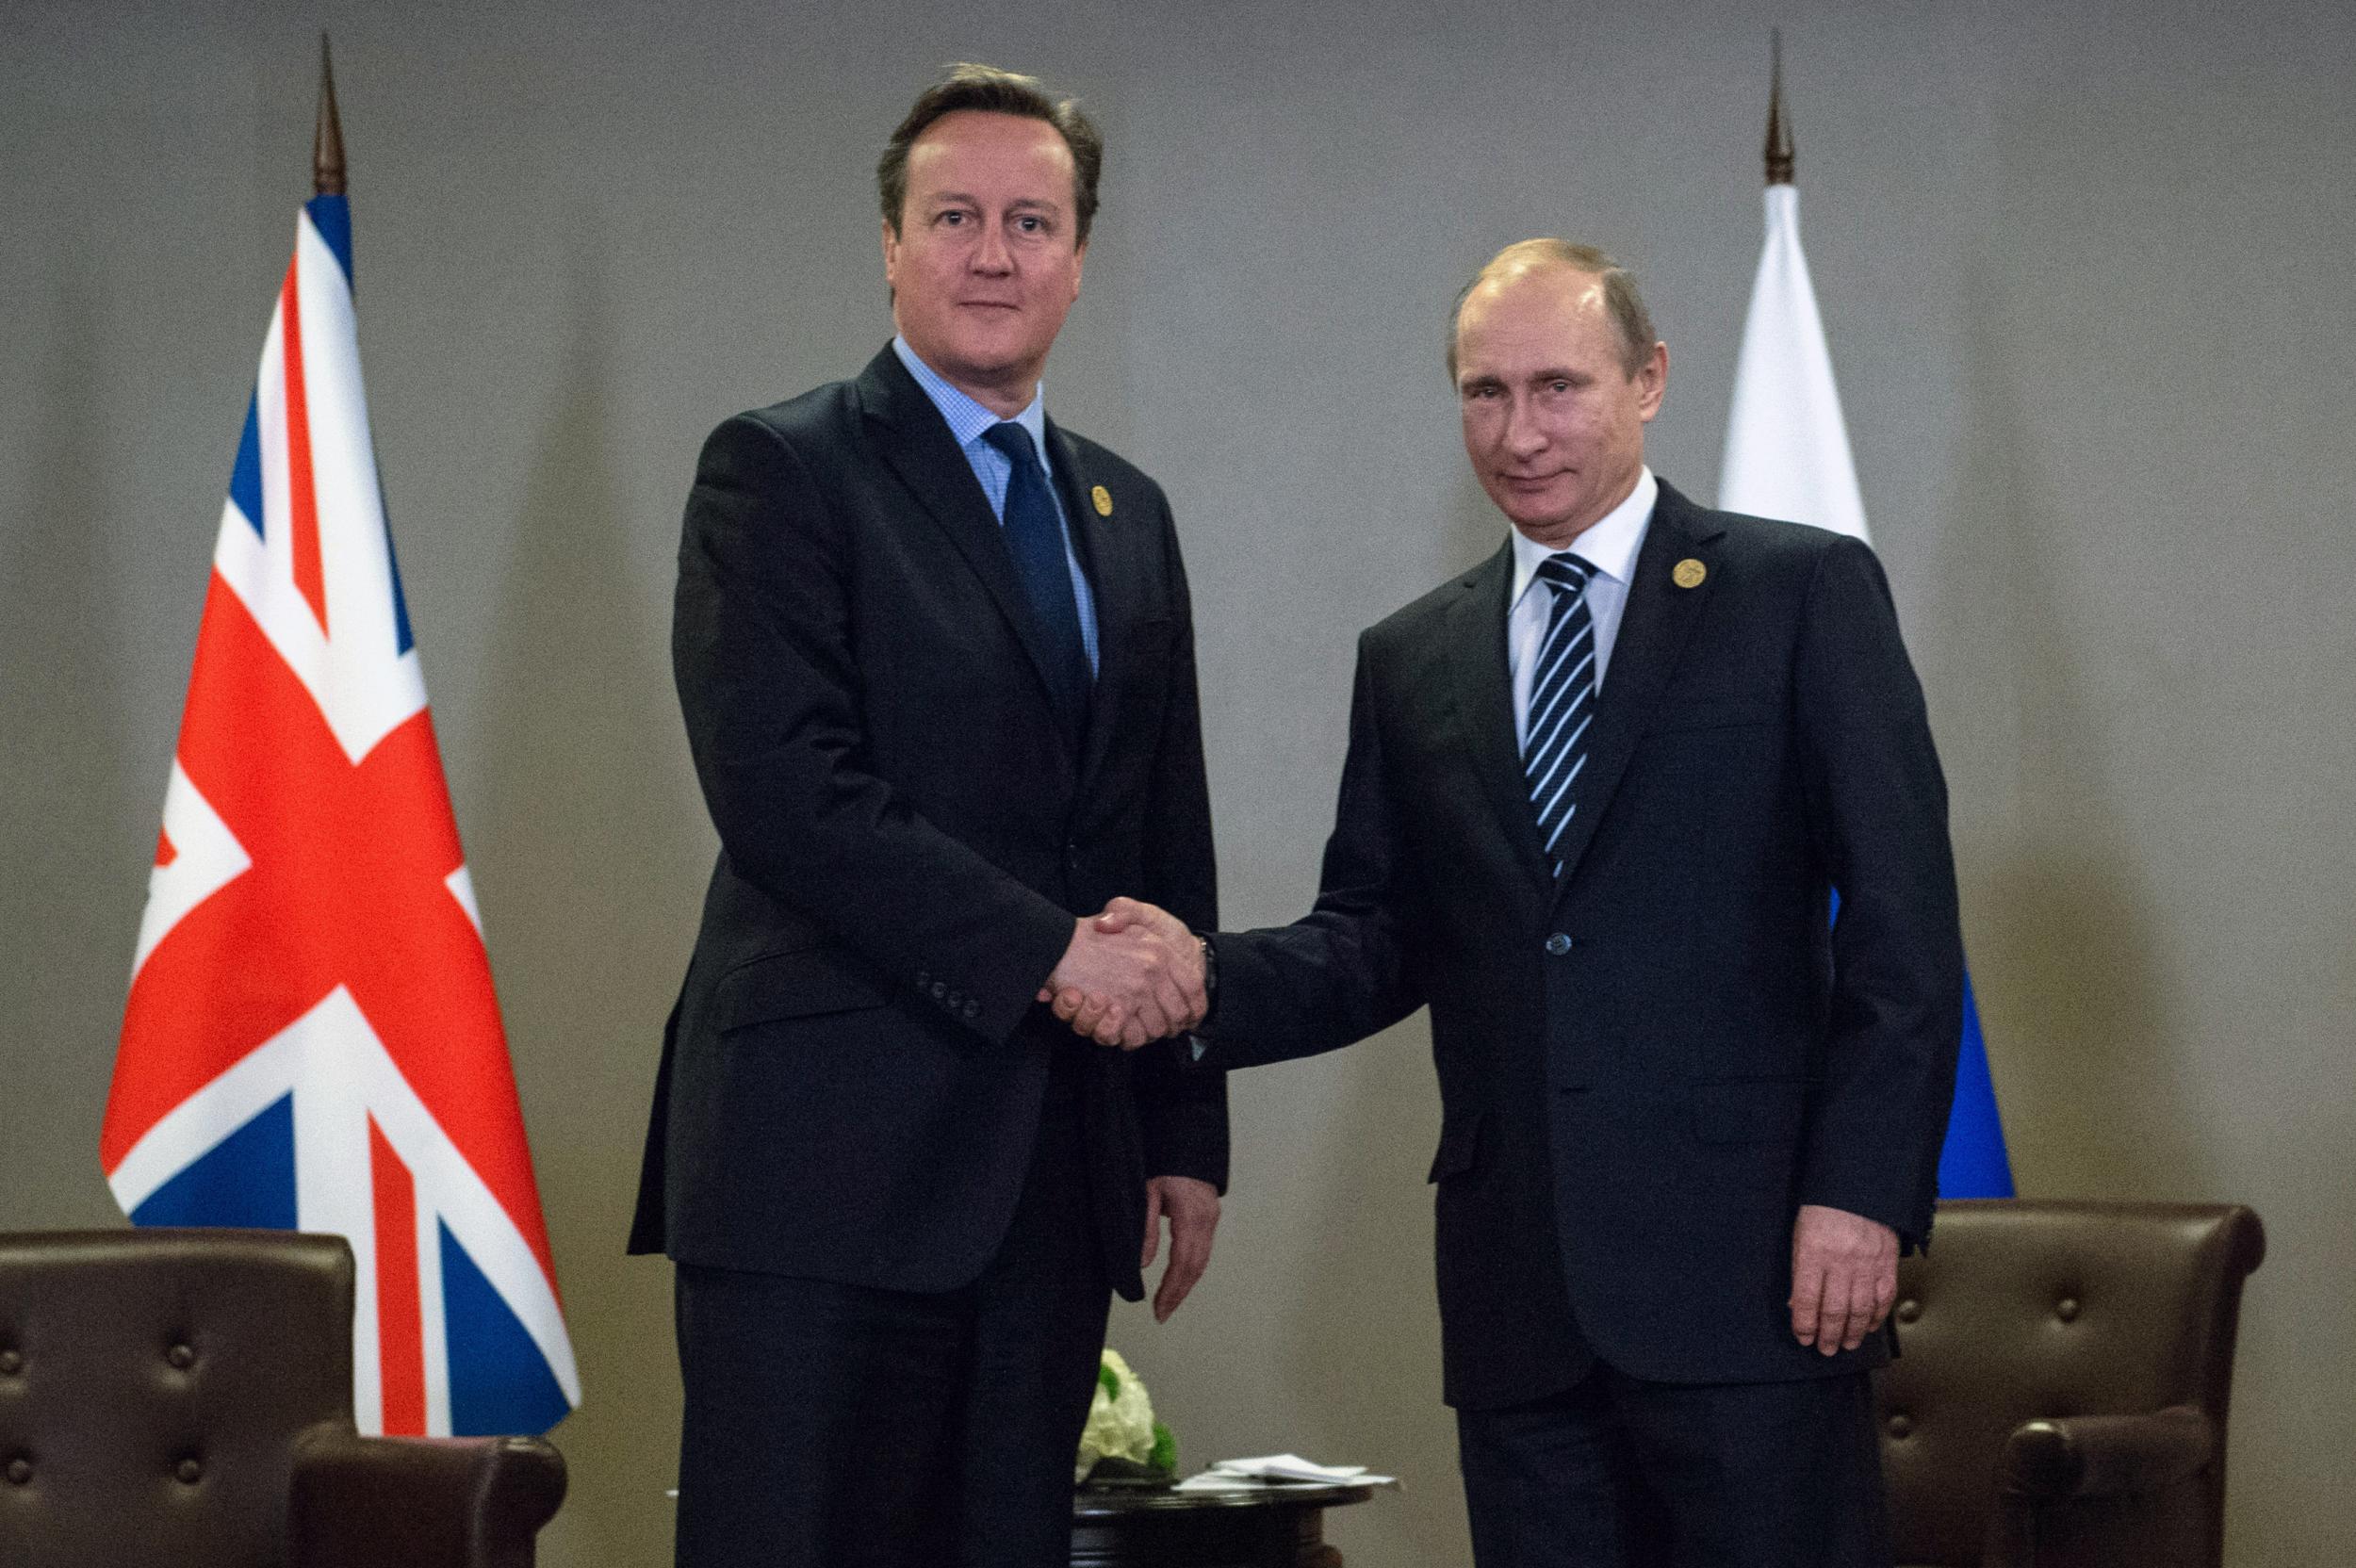 Vladimir Putin meets David Cameron at G20 summit in Turkey